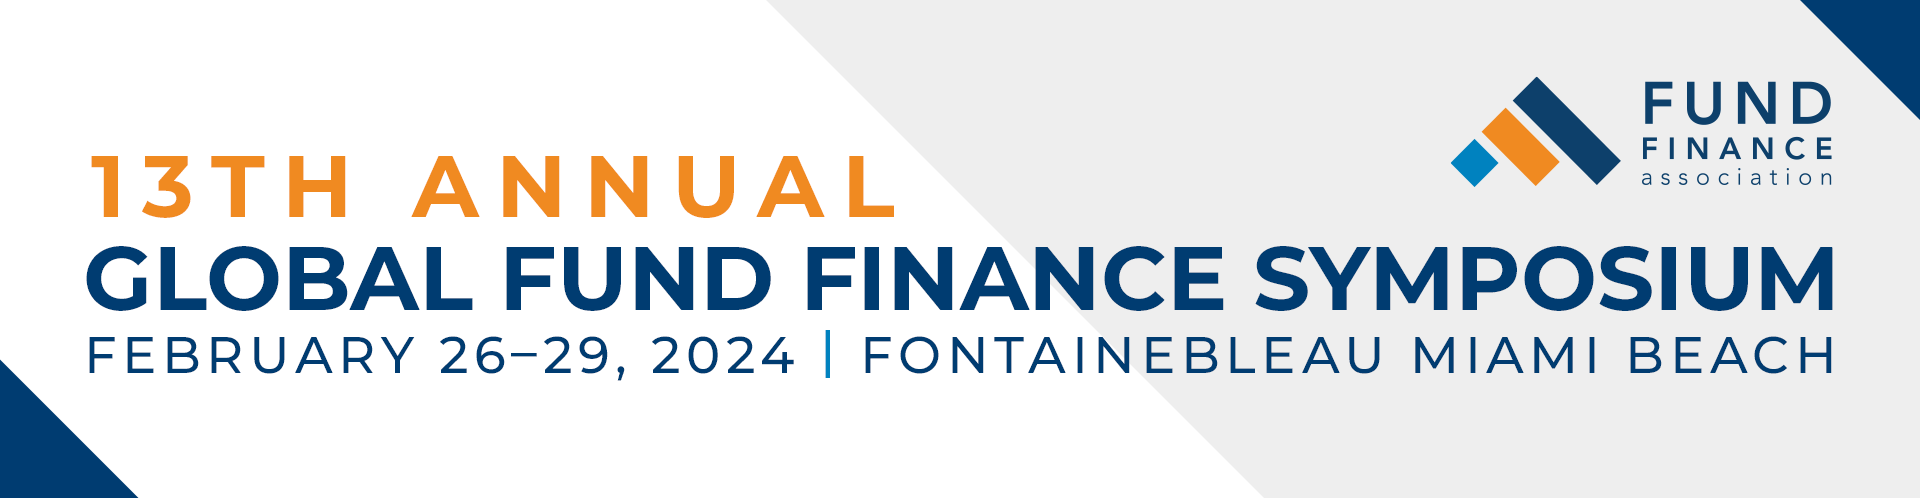 2024 Global Fund Finance Symposium